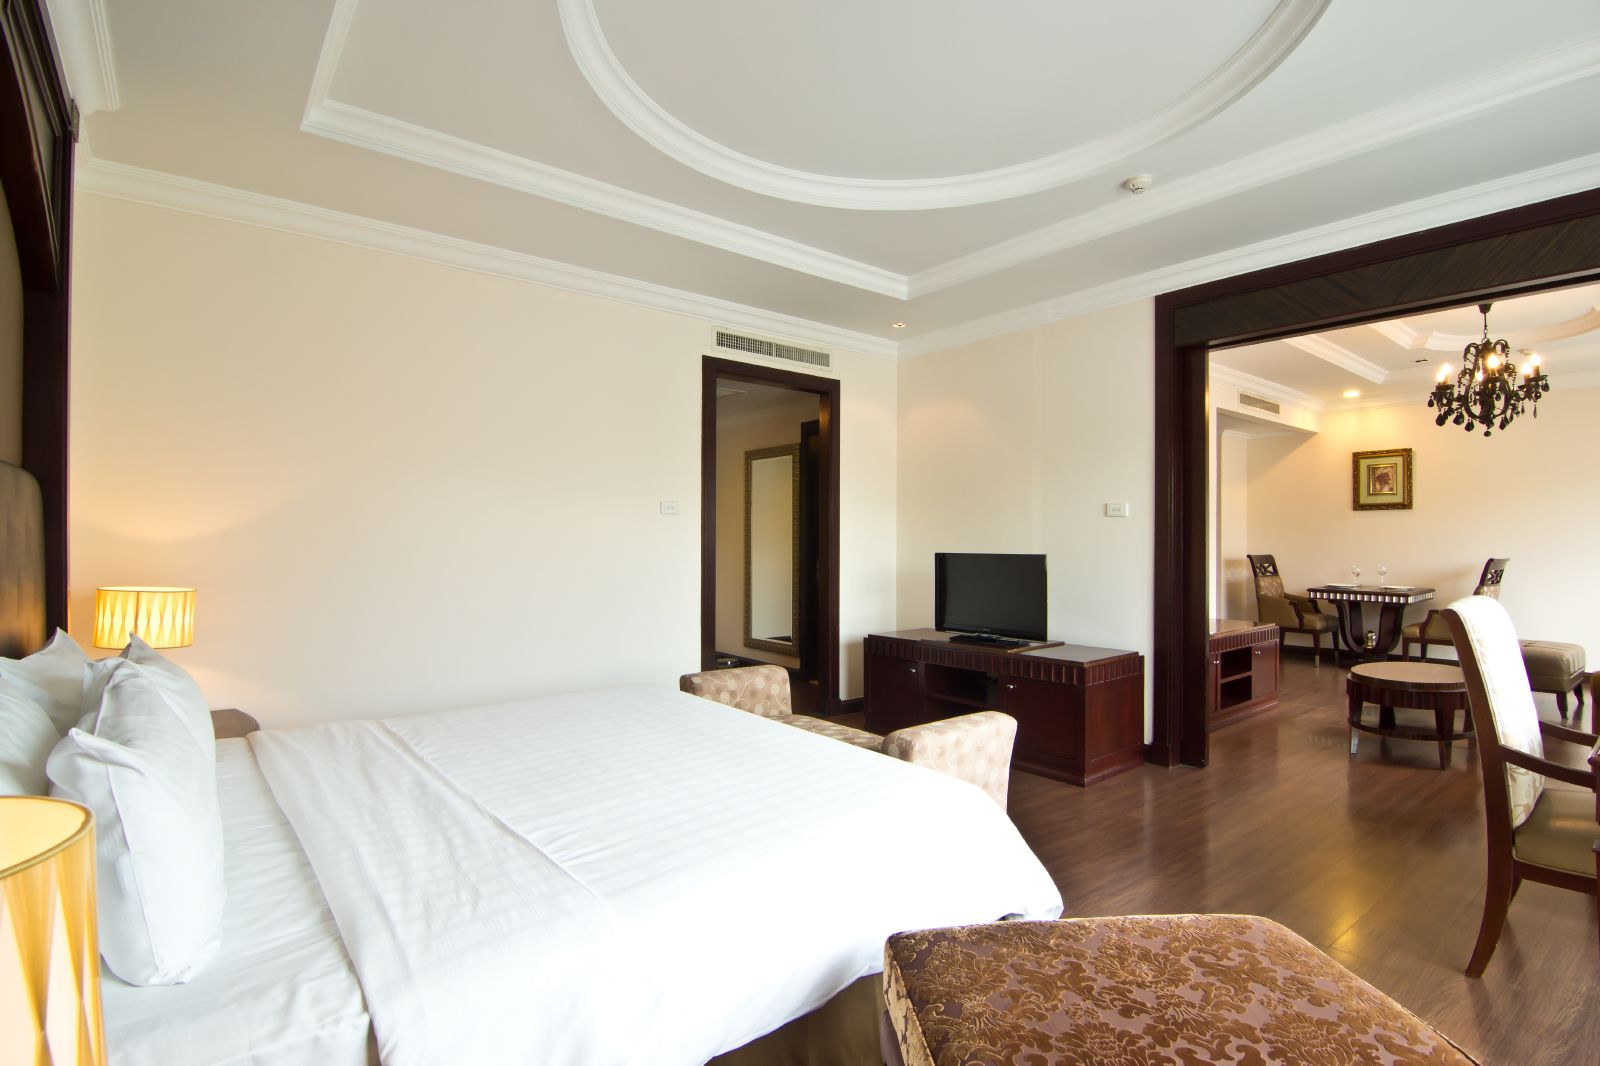 One bedroom suite. Renaissance Residence Pattaya.